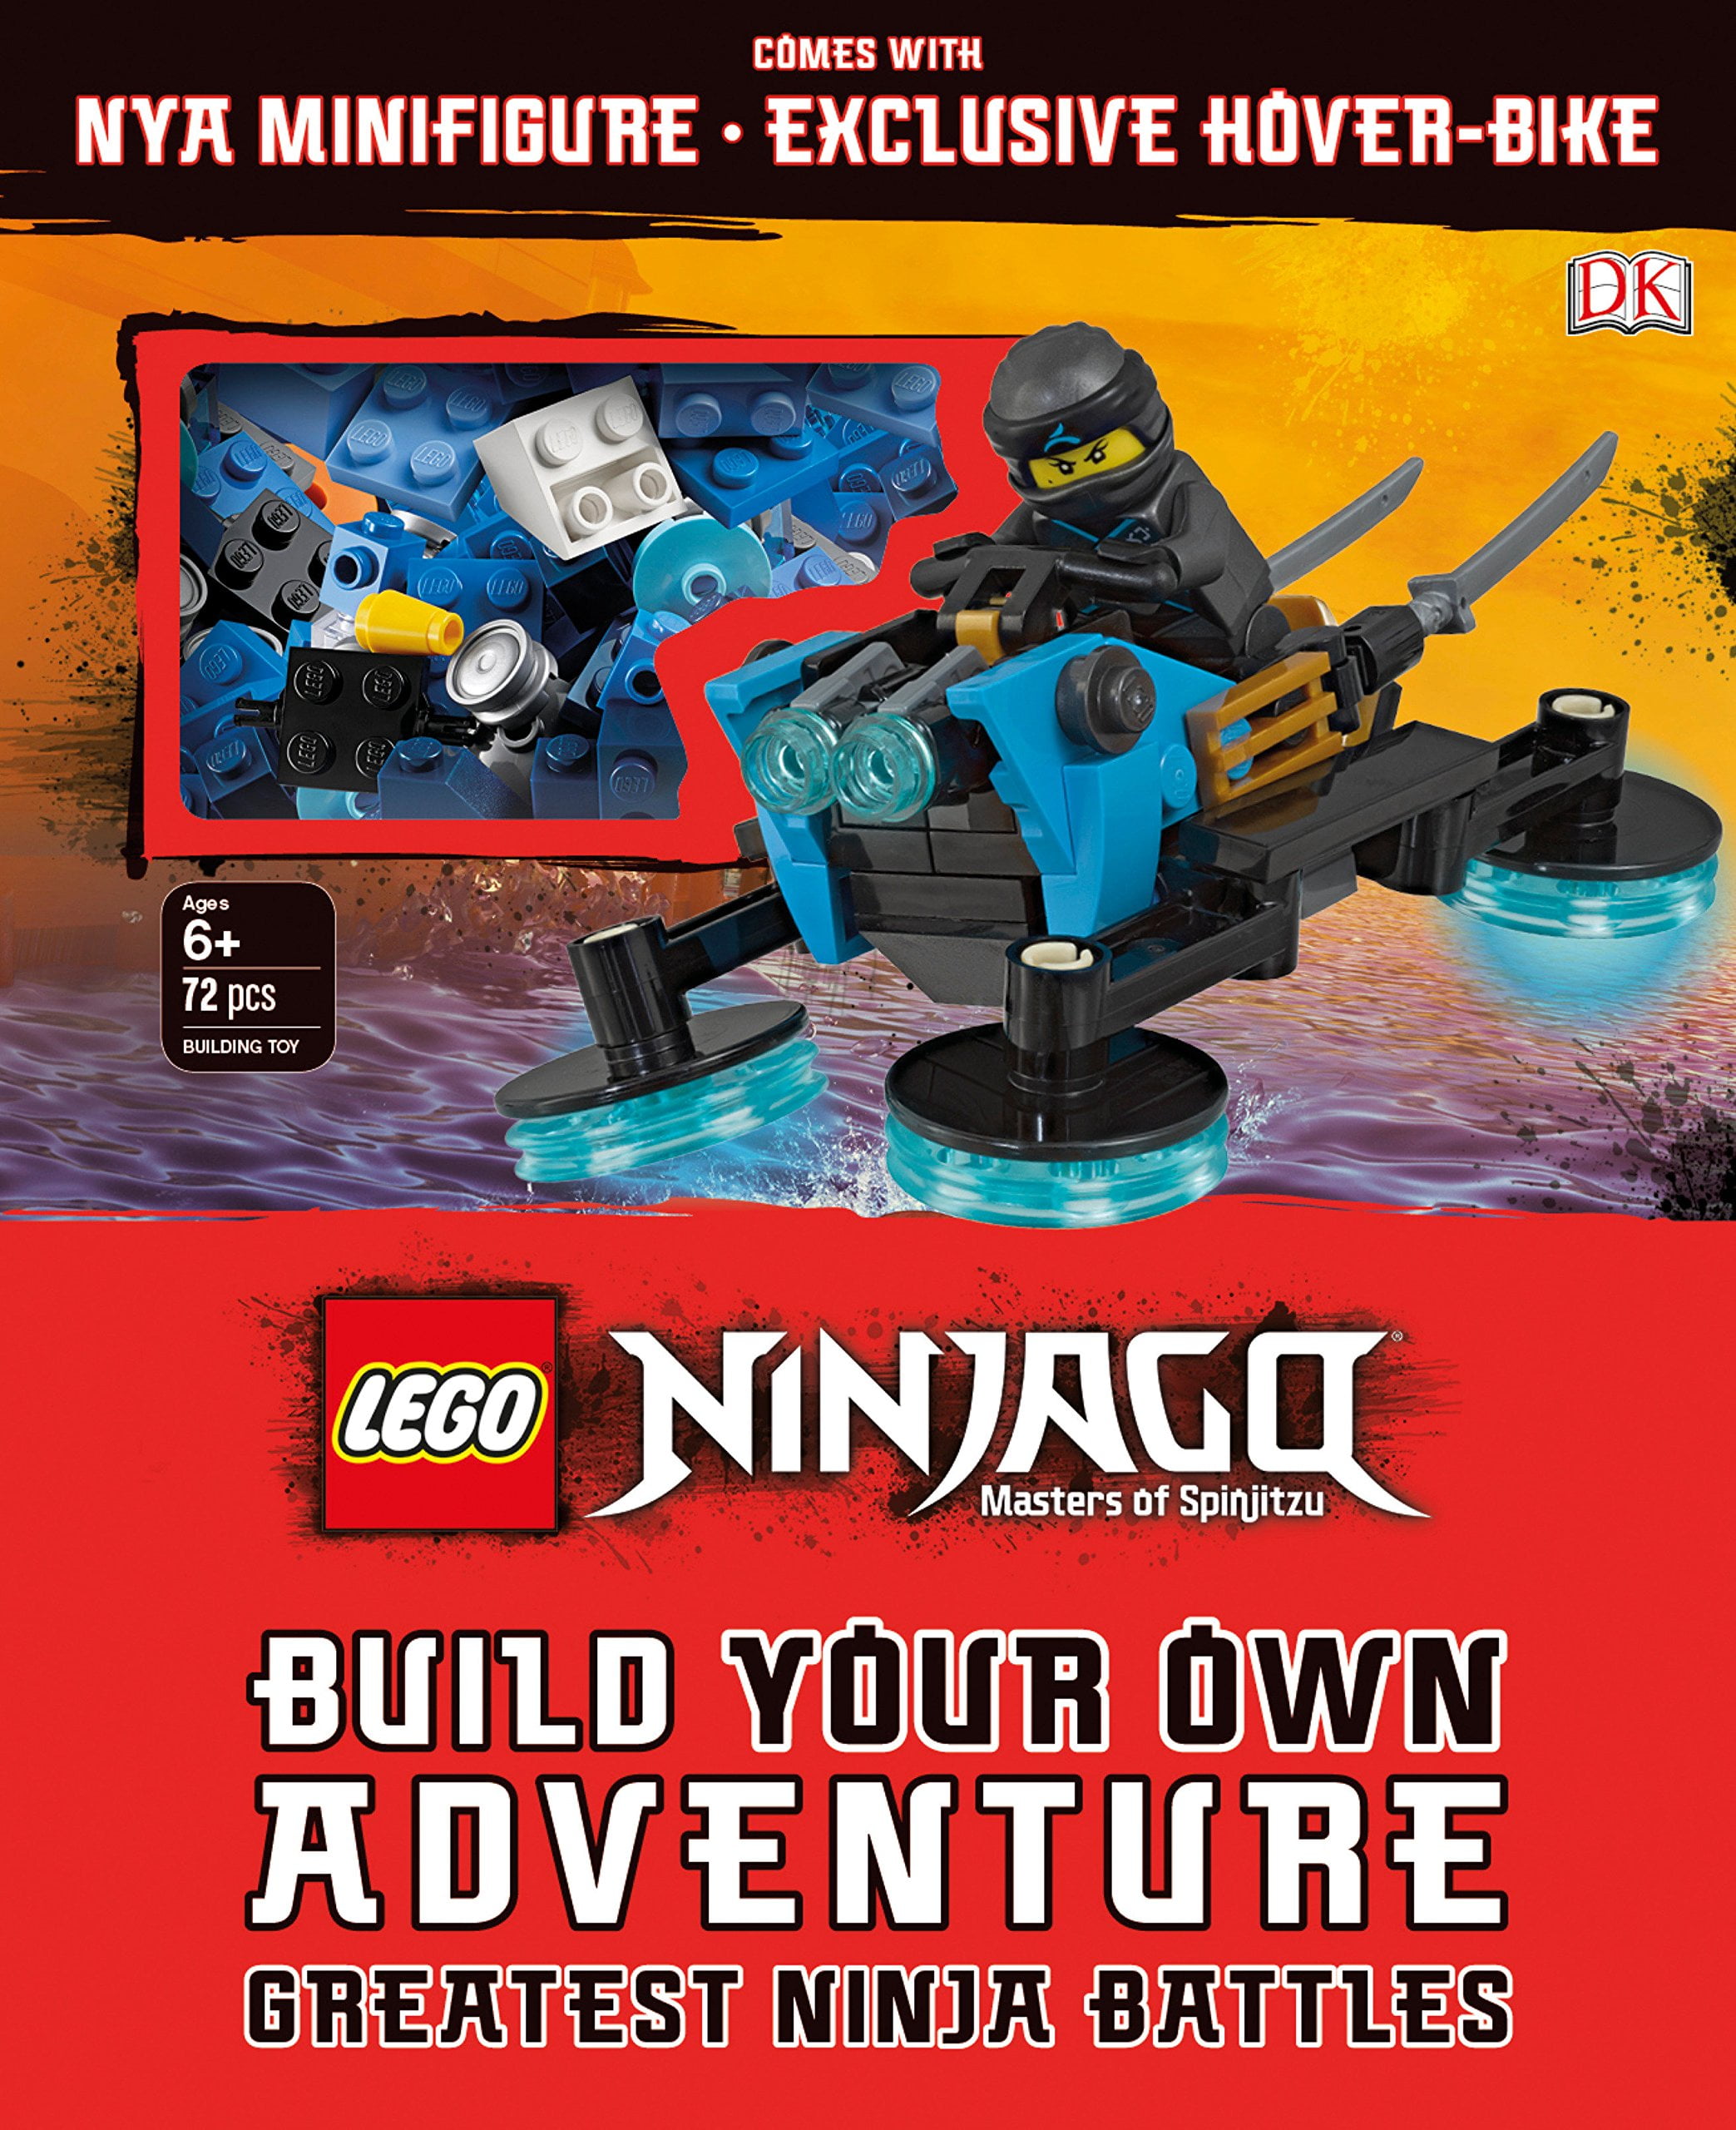 Lego Ninjago? nah, play tive robot adventure : r/crappyoffbrands